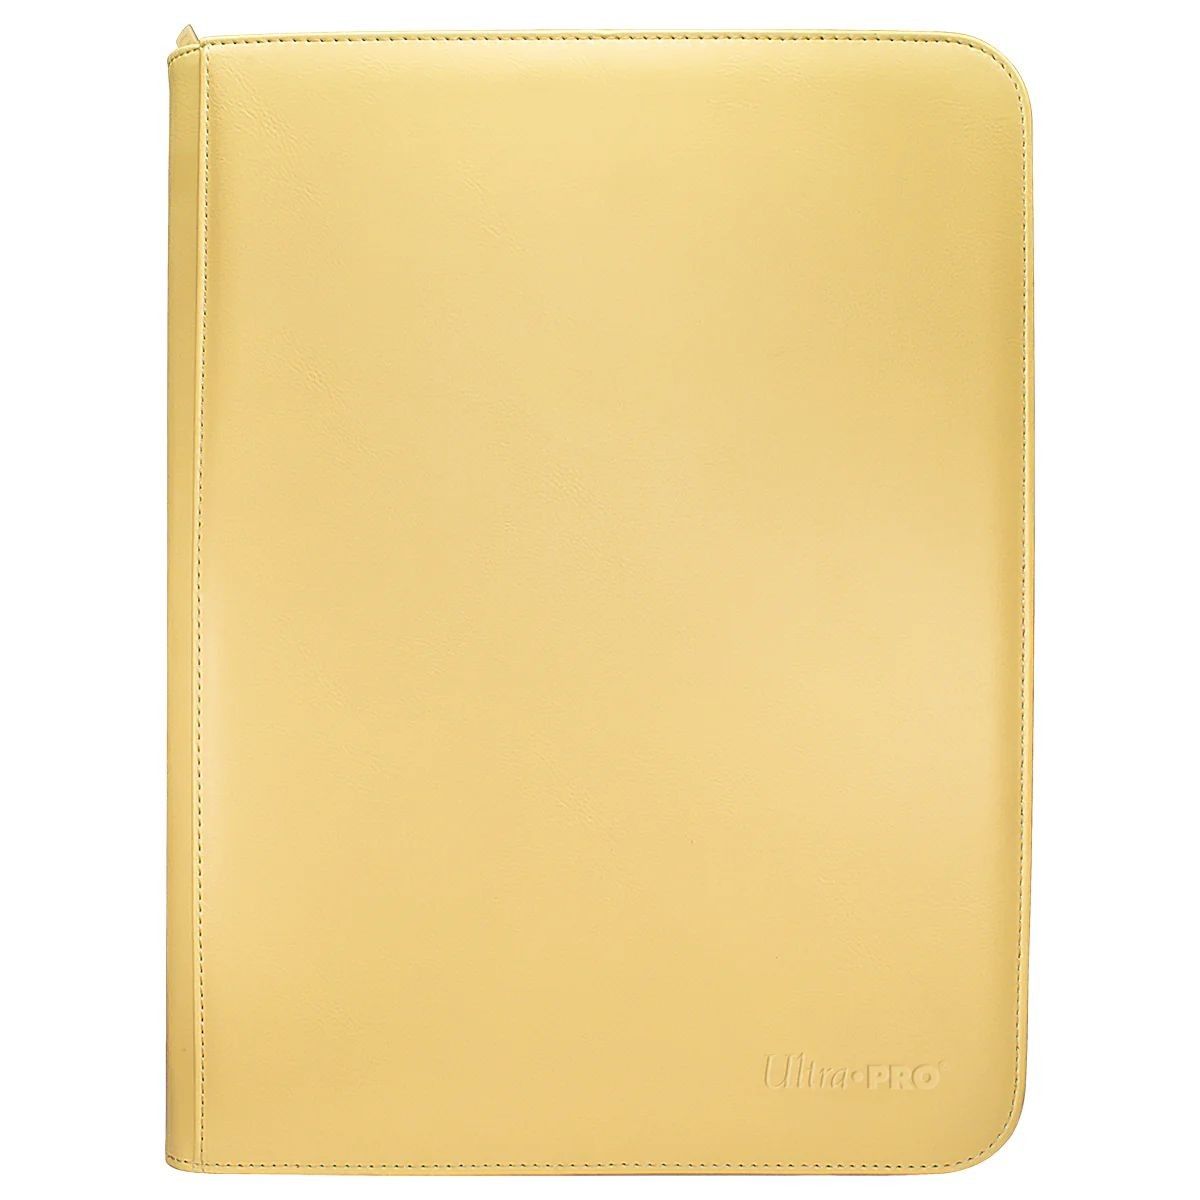 Ultra Pro - Pro-Binder Premium - Vivid Yellow (360)